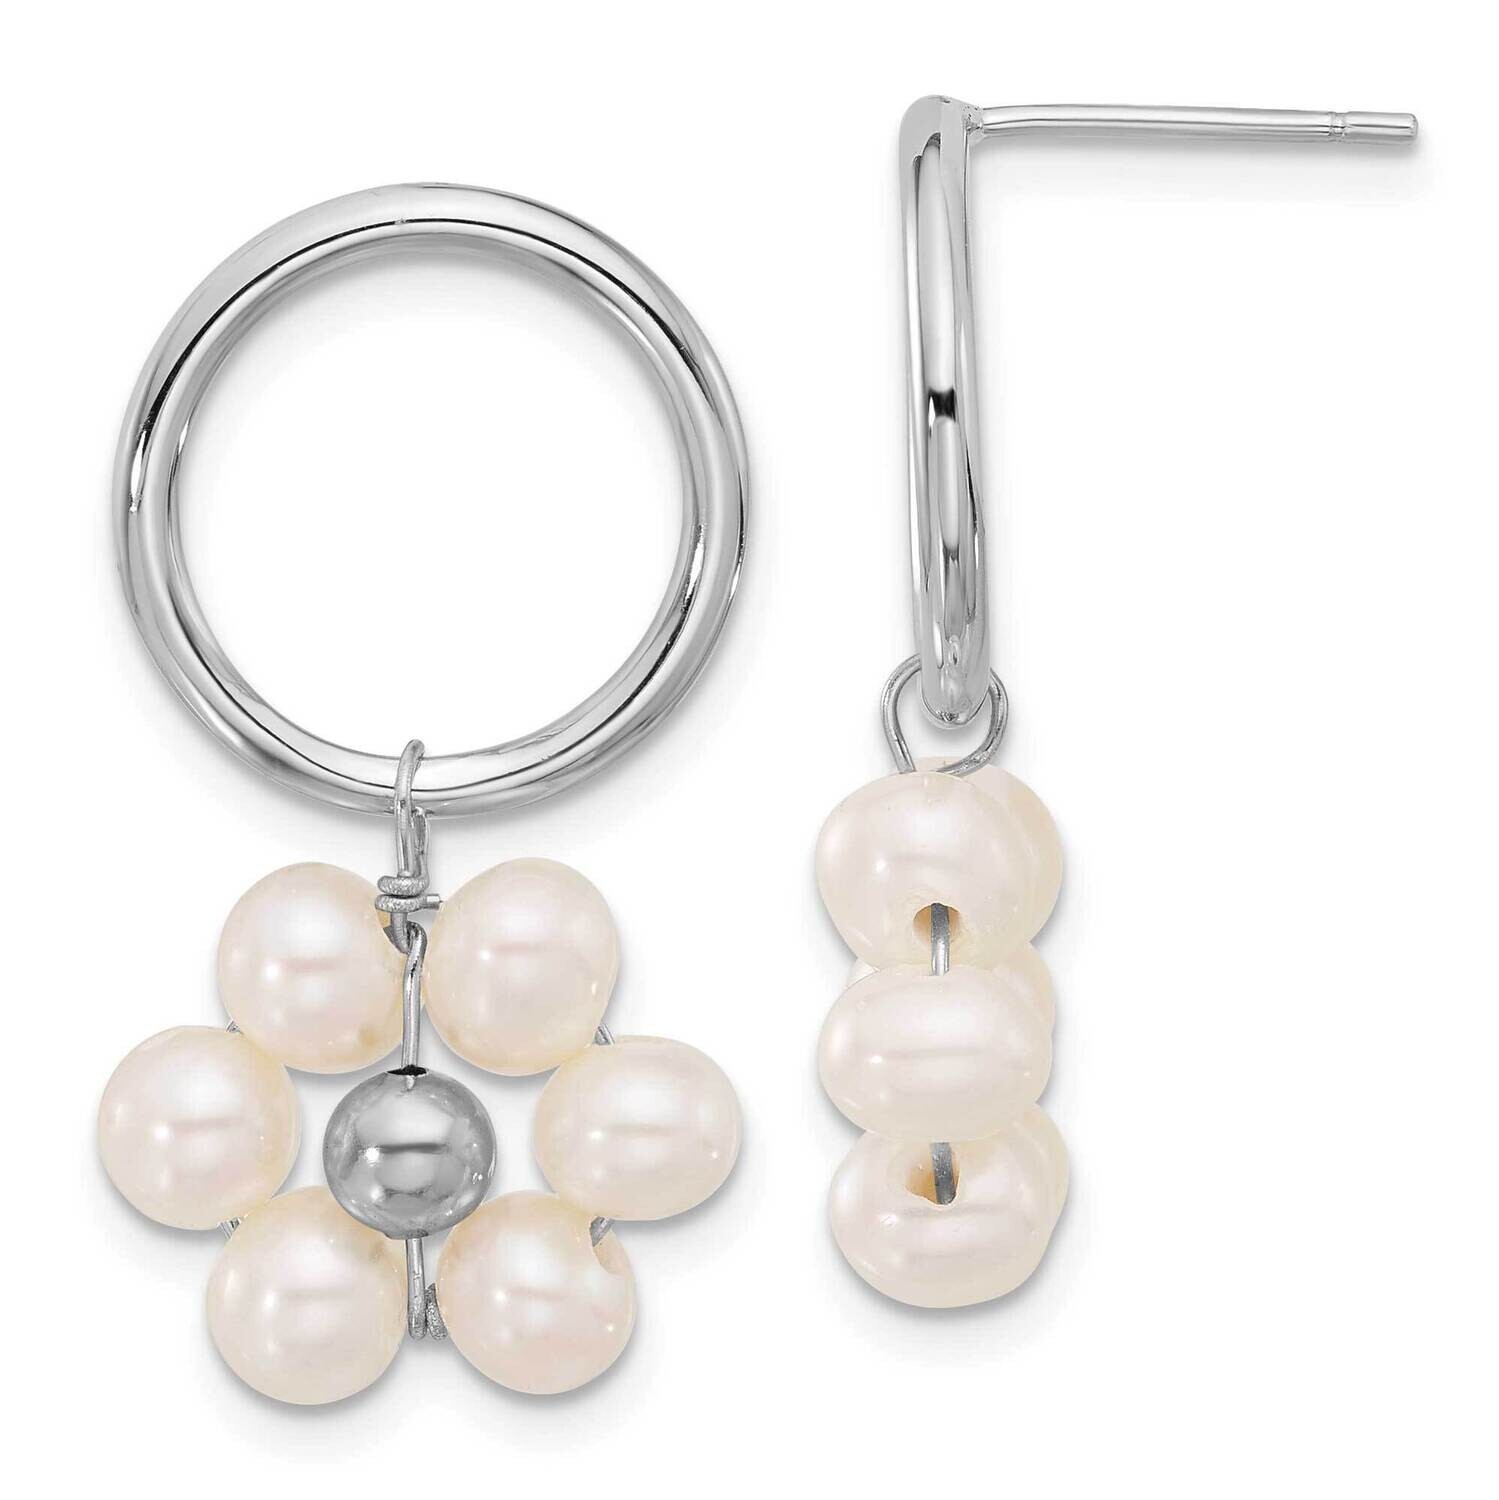 Rh-Plated 4-5mm White Fwc Pearl Flower Dangle Earrings Sterling Silver QE16719